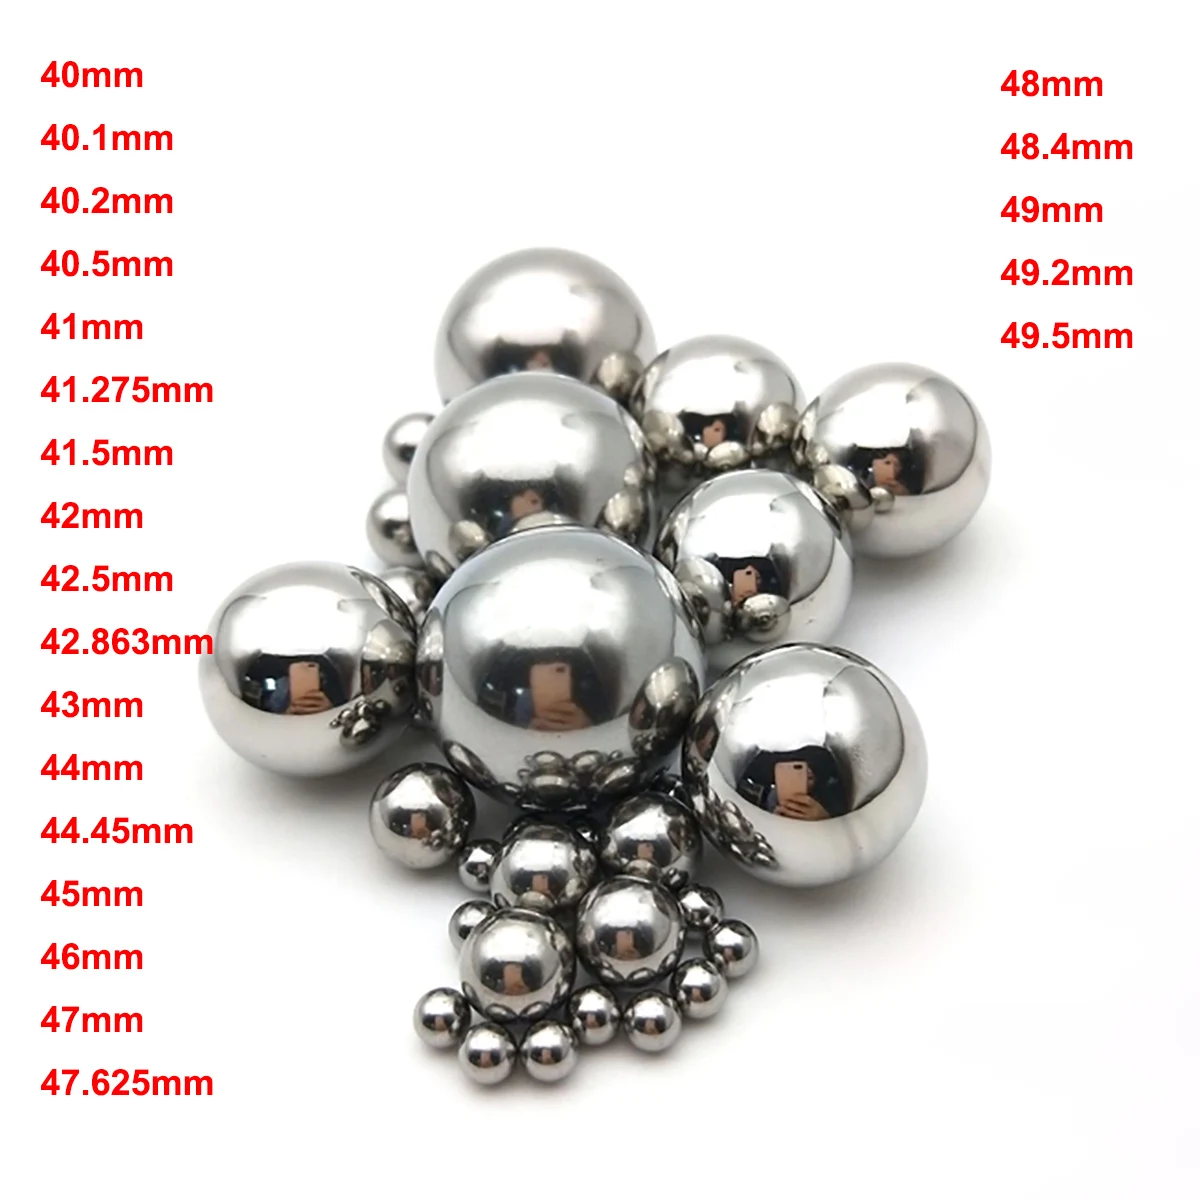 

1pcs 40/40.1/40.2/40.5/41/41.275/41.5/42/42.5/42.863-49.5mm High Precision Bearing Balls GCR15 Bearing Steel Smooth Solid Ball